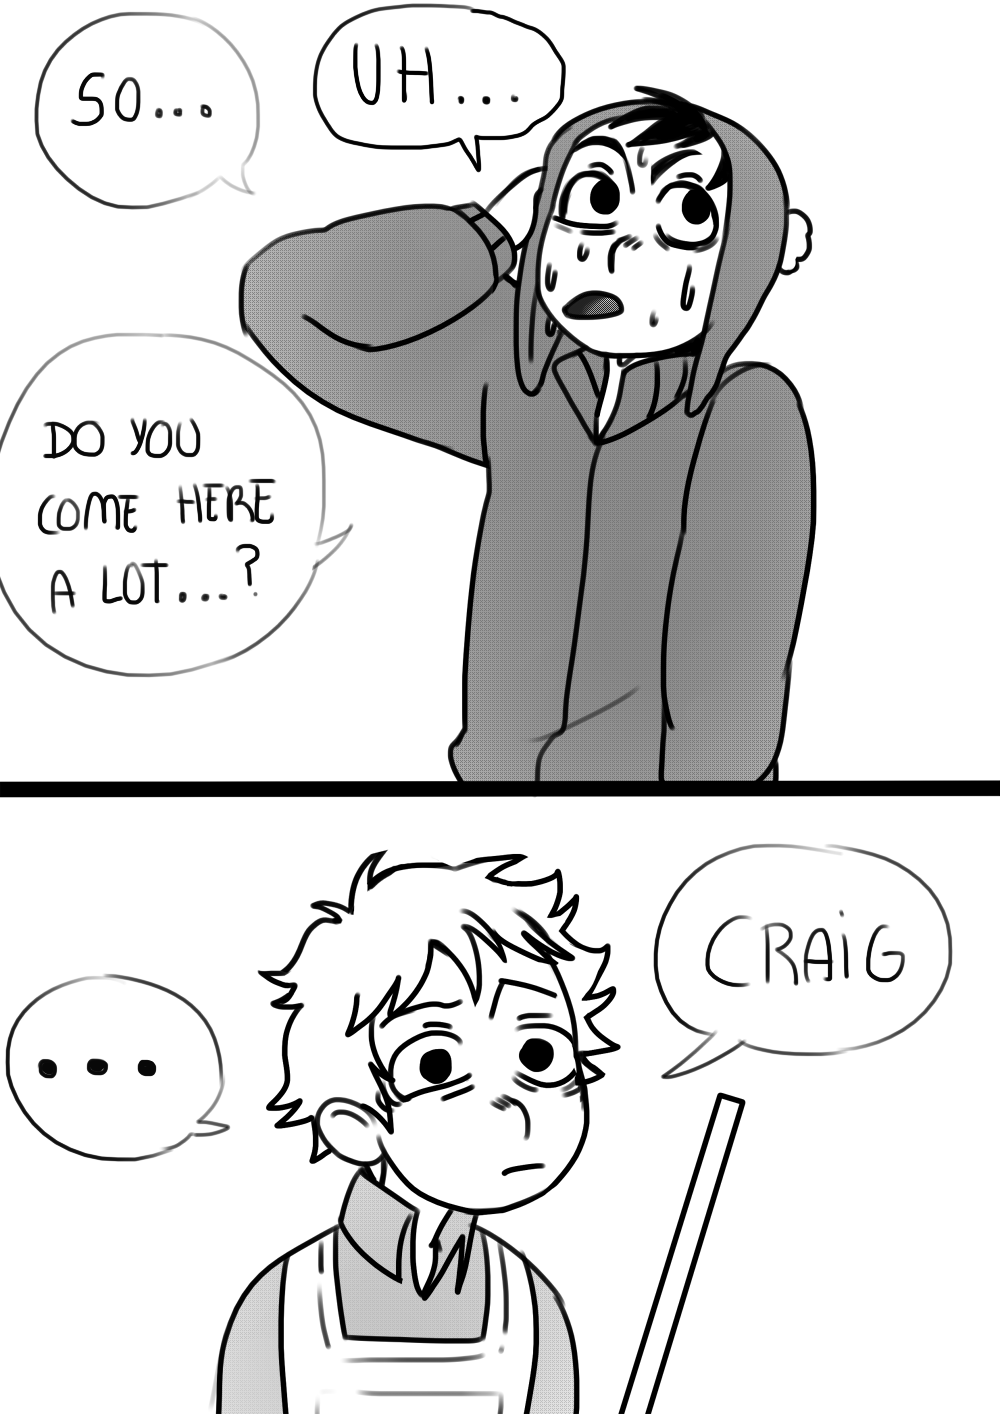 So Much Happening Craig Flirting Badly